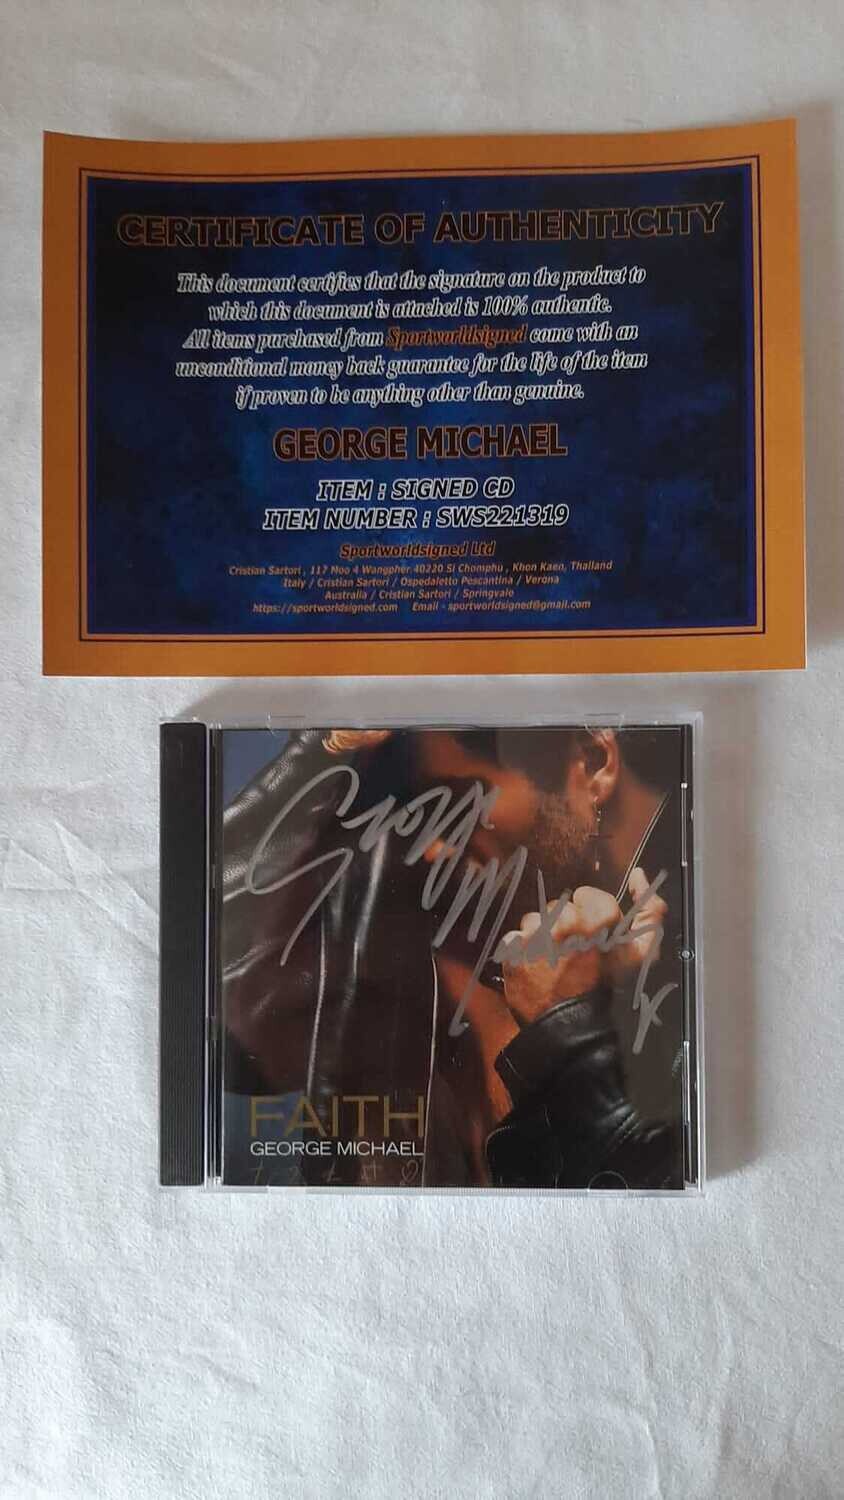 GEORGE MICHAEL signed CD Autografo GEORGE MICHAEL Signed CD Autograph Faith CD GEORGE MICHAEL